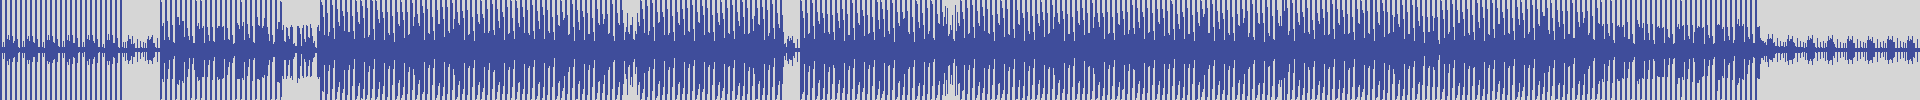 nf_boyz_records [NFY052] Sora - Keys [Kingdom of Tech Mix] audio wave form